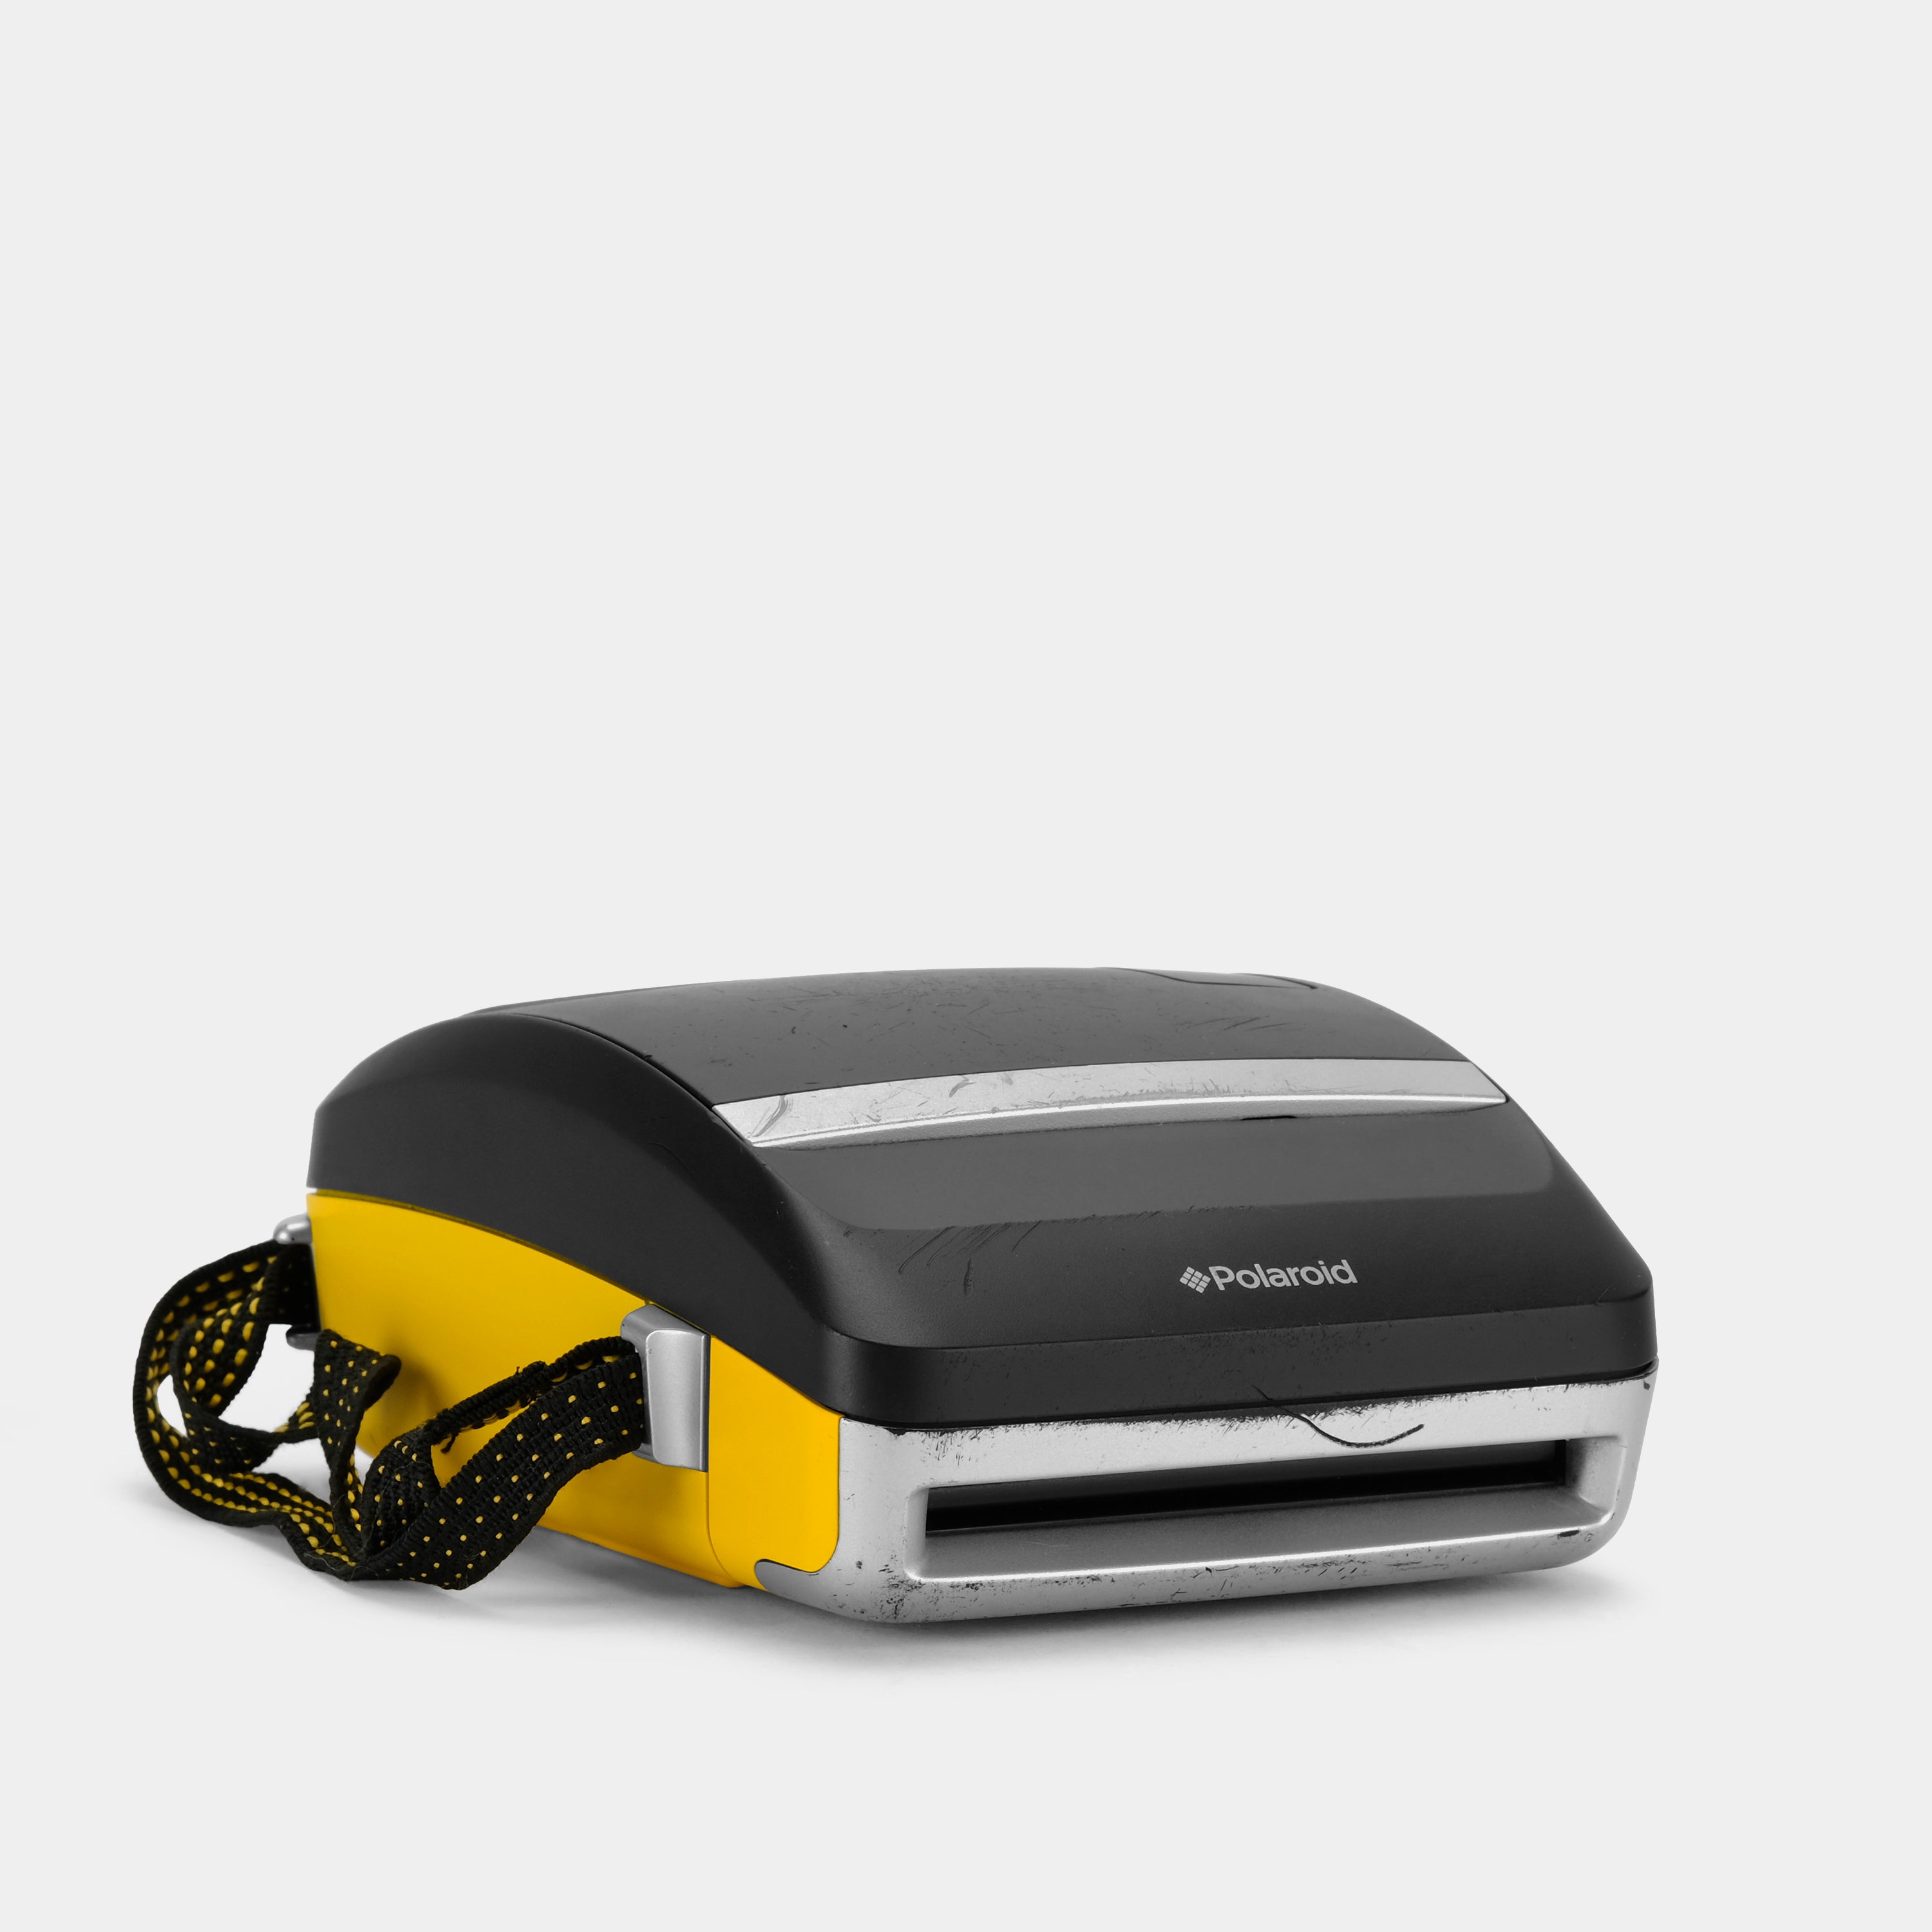 Polaroid One600 "JobPro" Black and Yellow Instant Film Camera (B-Grade)